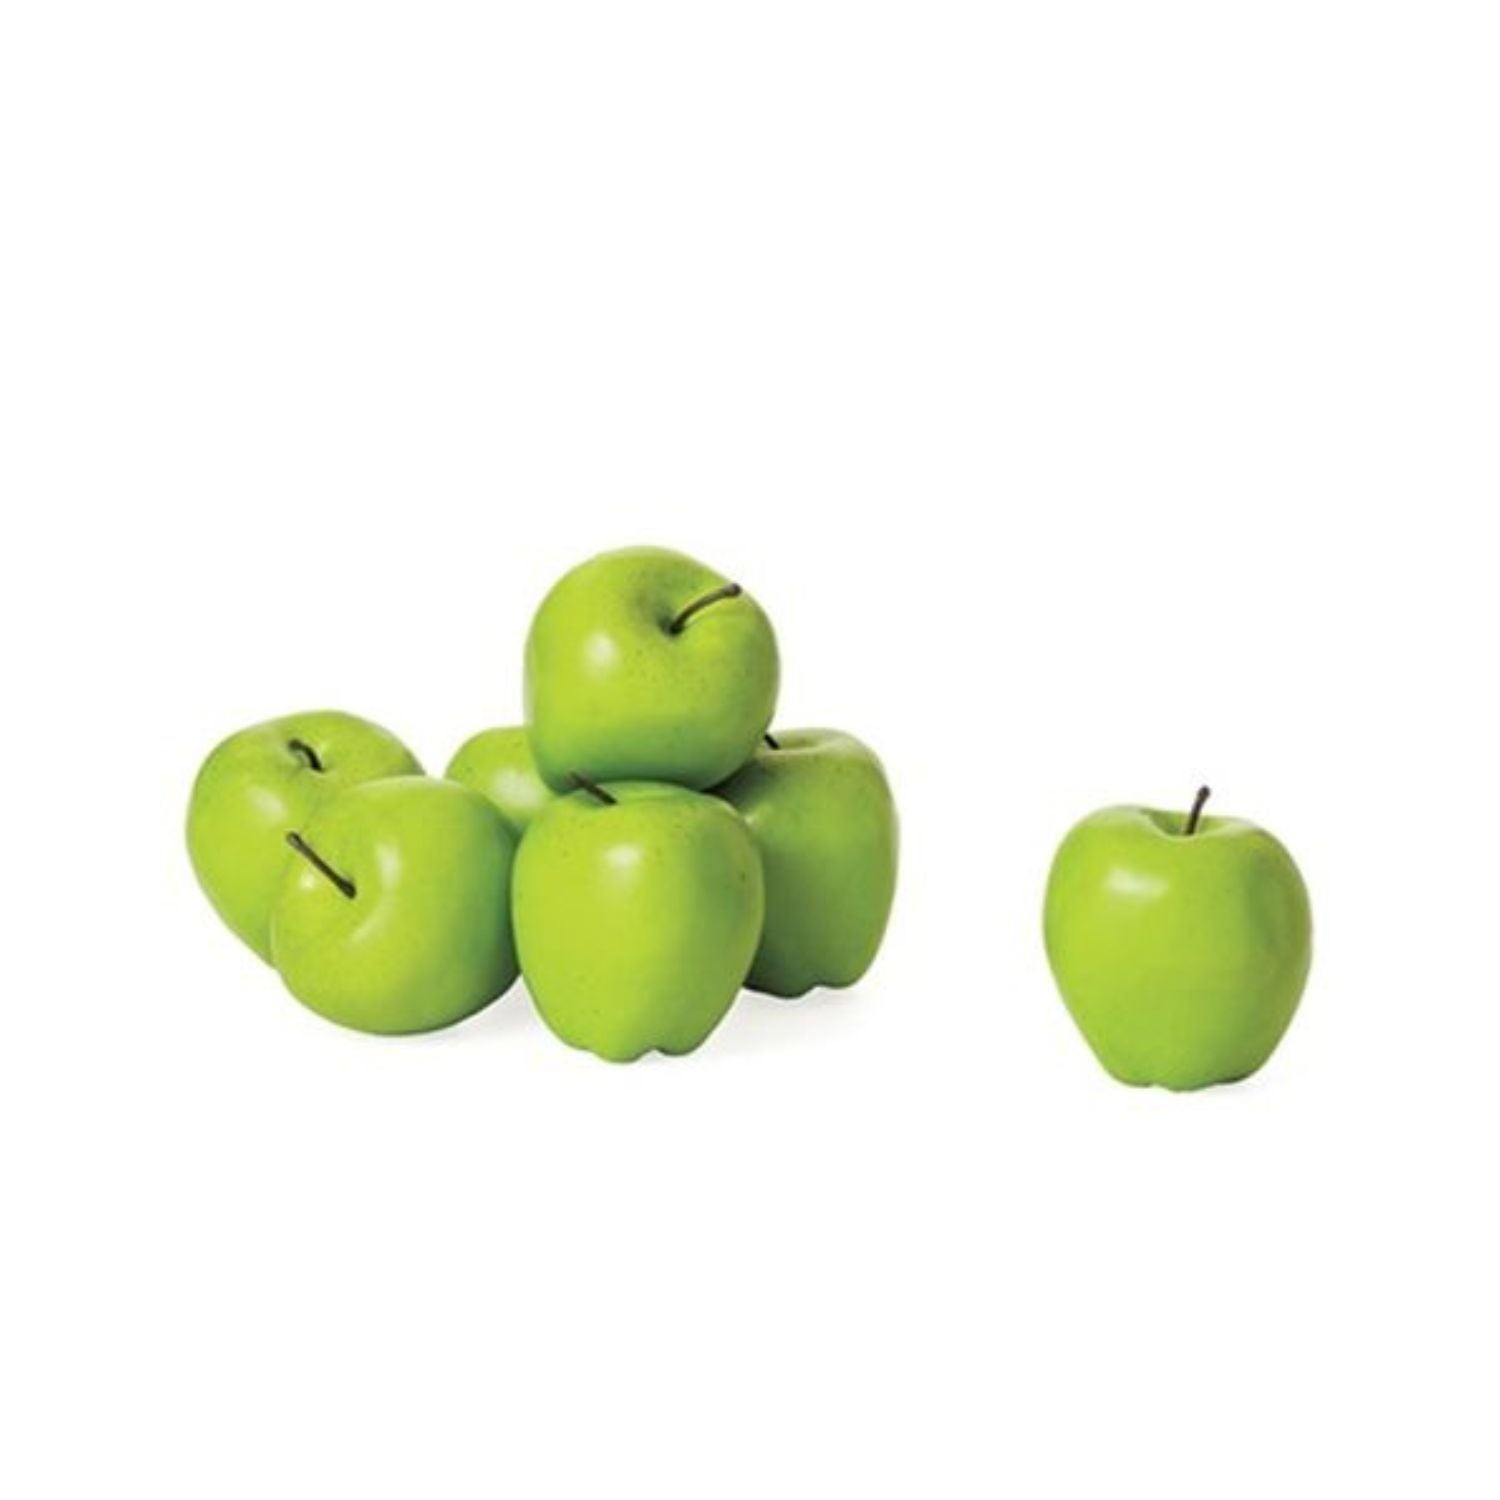 Torre & Tagus Orchard Faux Fruit Decor Set of 8 - Apples